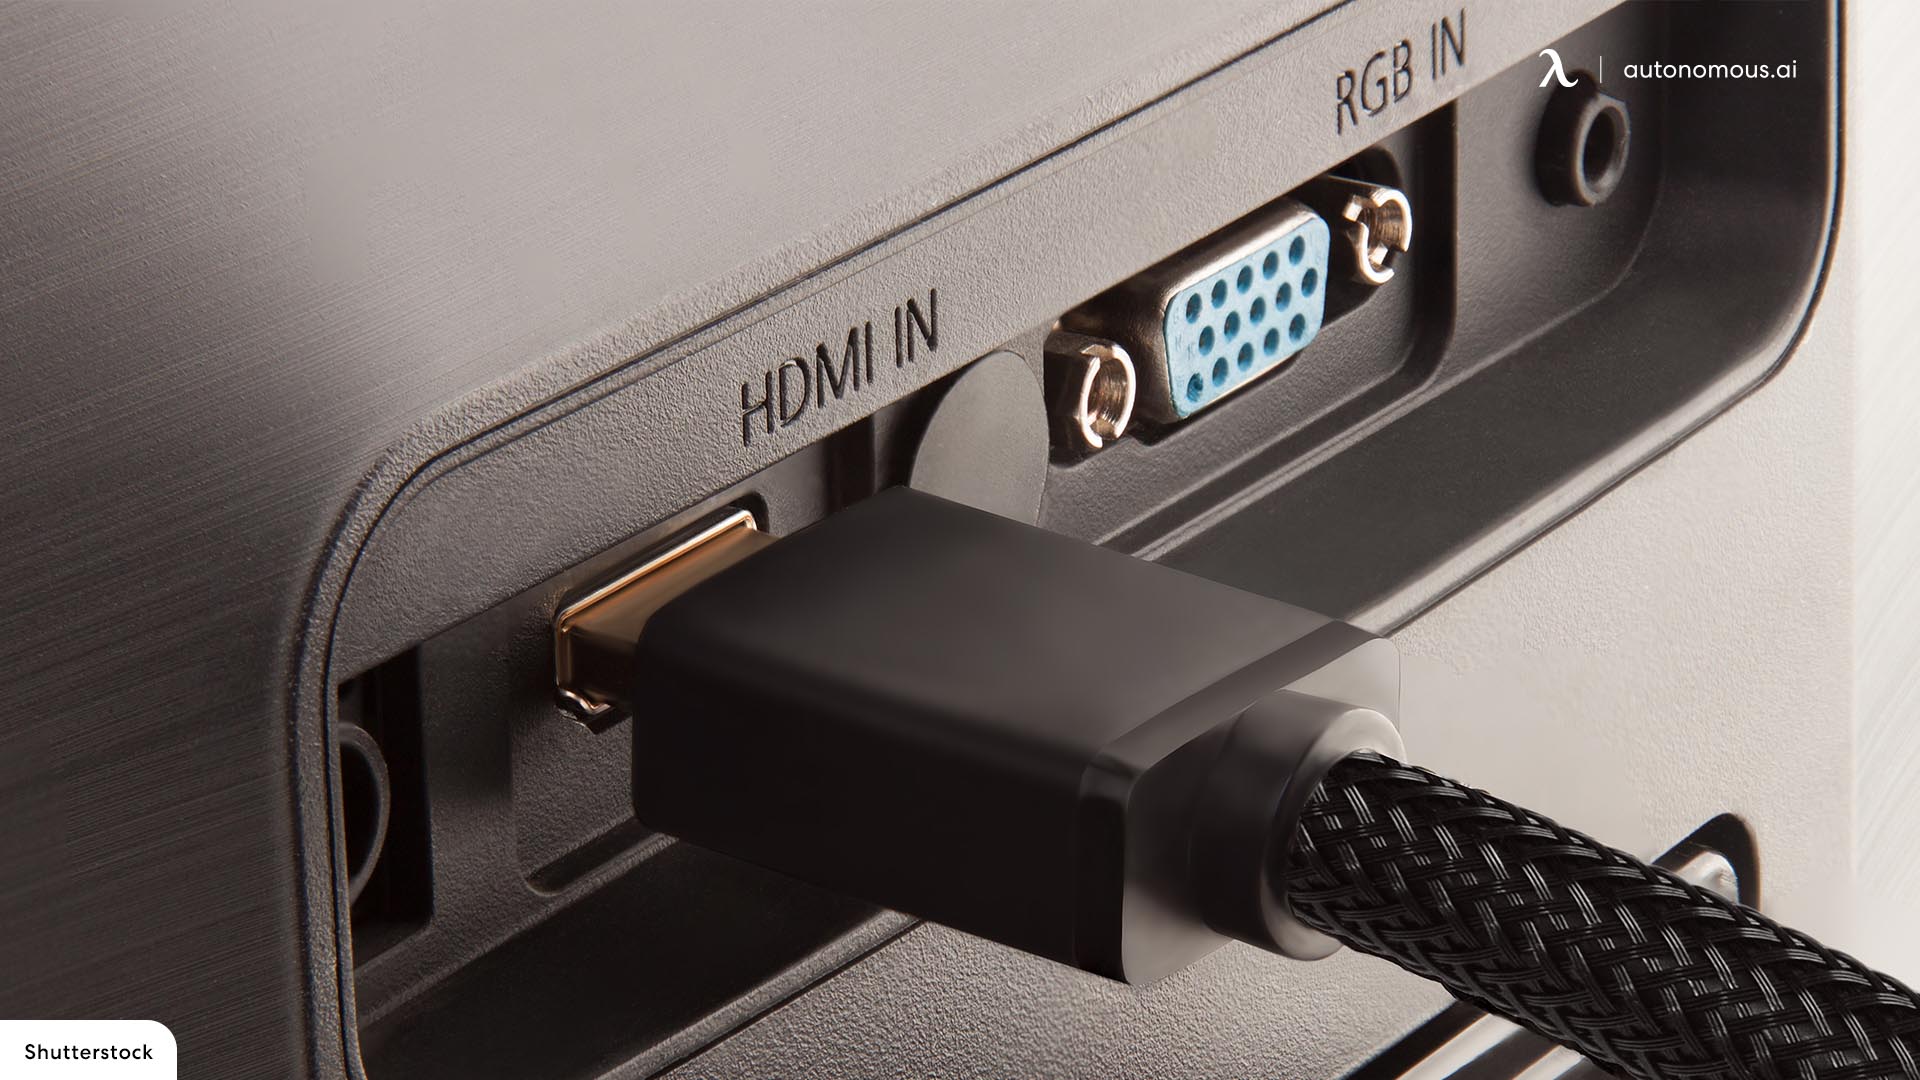 Connection via HDMI Xbox monitor setup